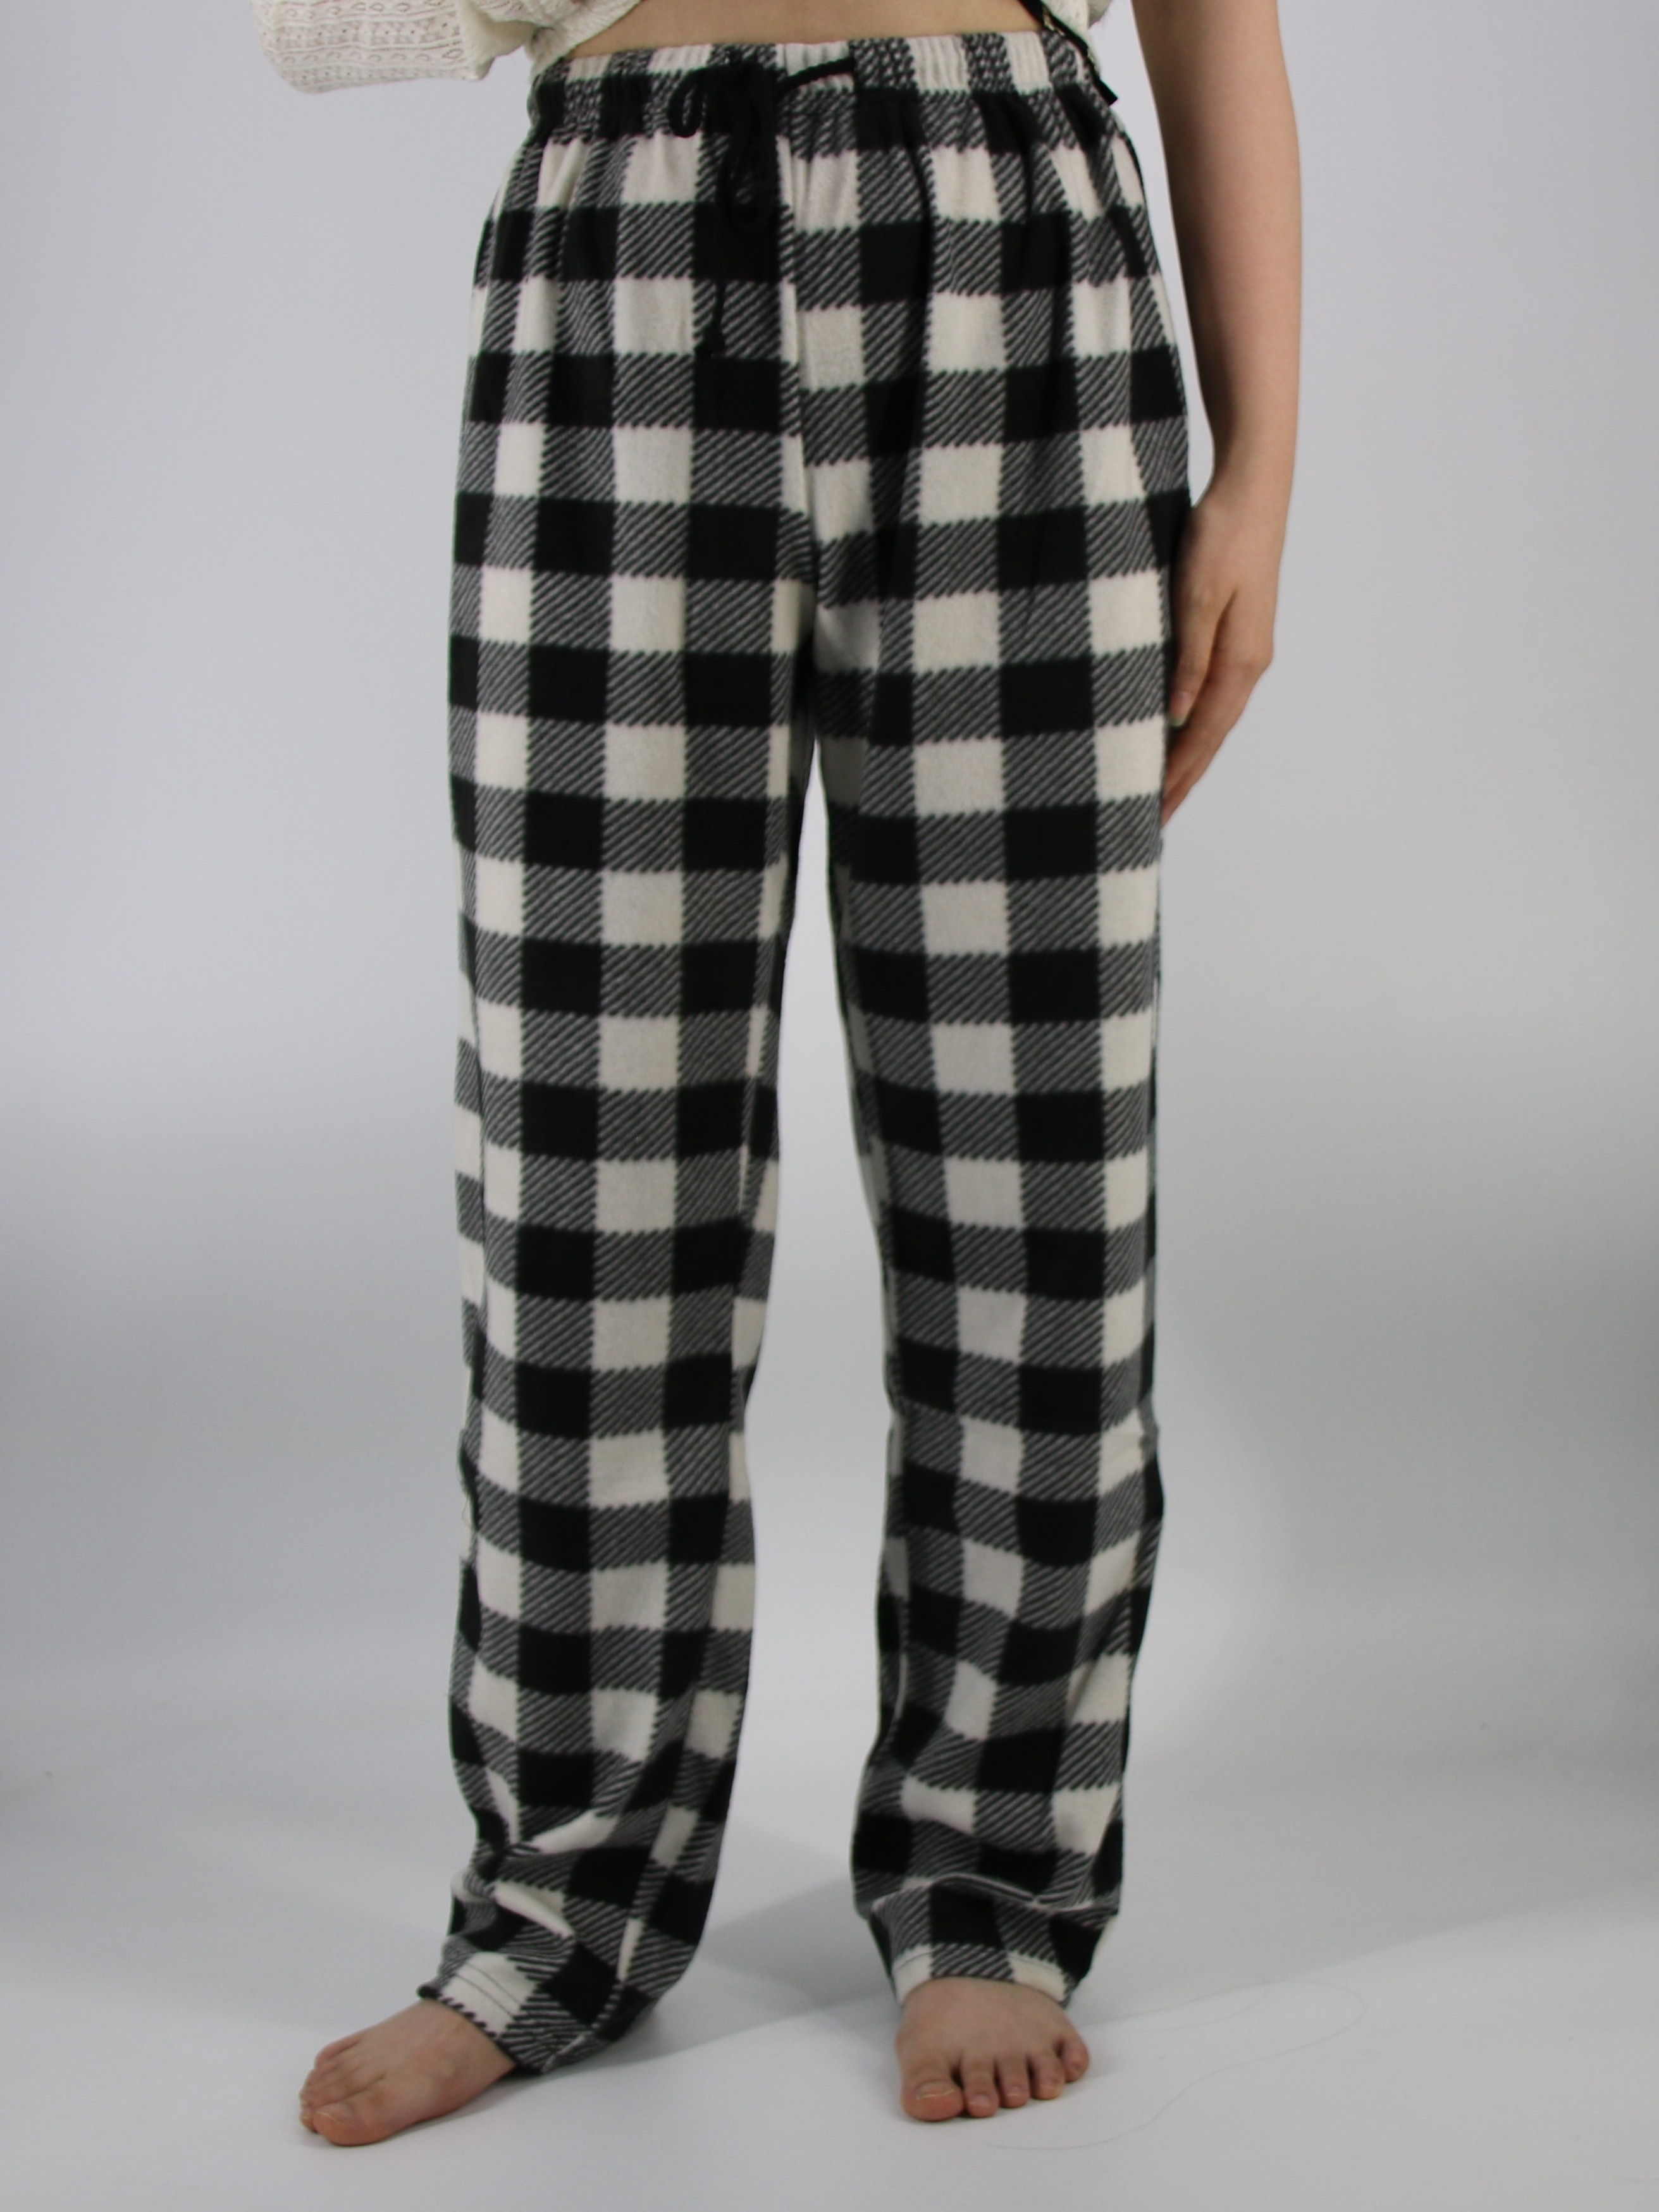 Just Love Women's Plush Pajama Pants - Cozy Lounge Sleepwear